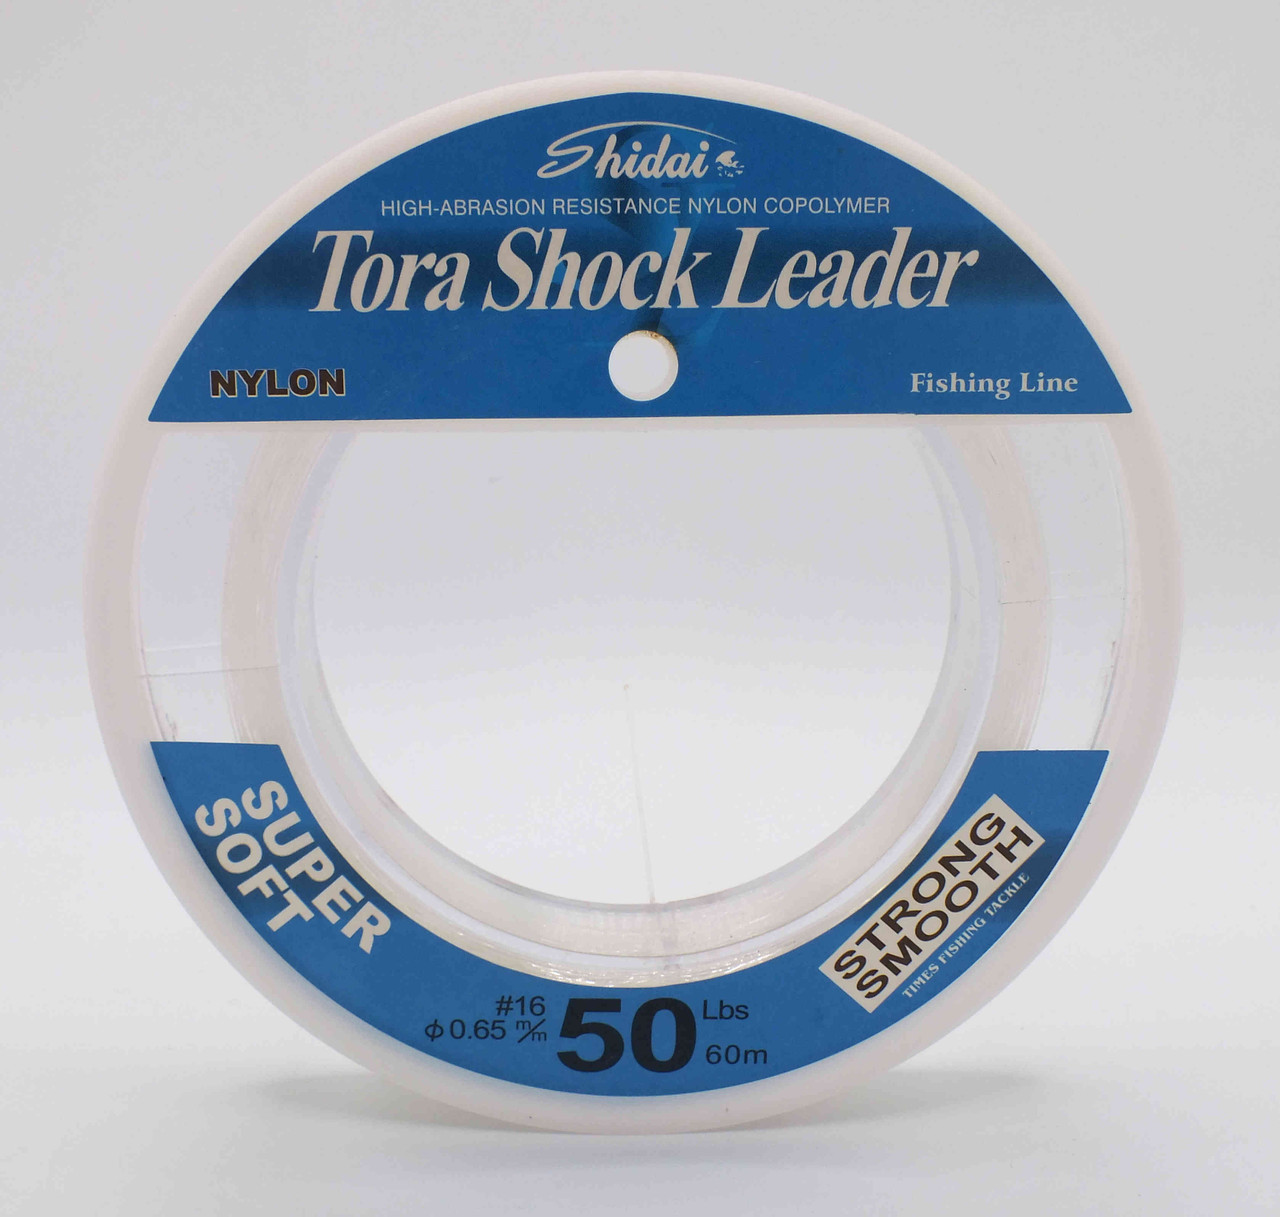 Tora Nylon Copolymer Leader Mono Fishing Line 50lb 60m - Wholesale